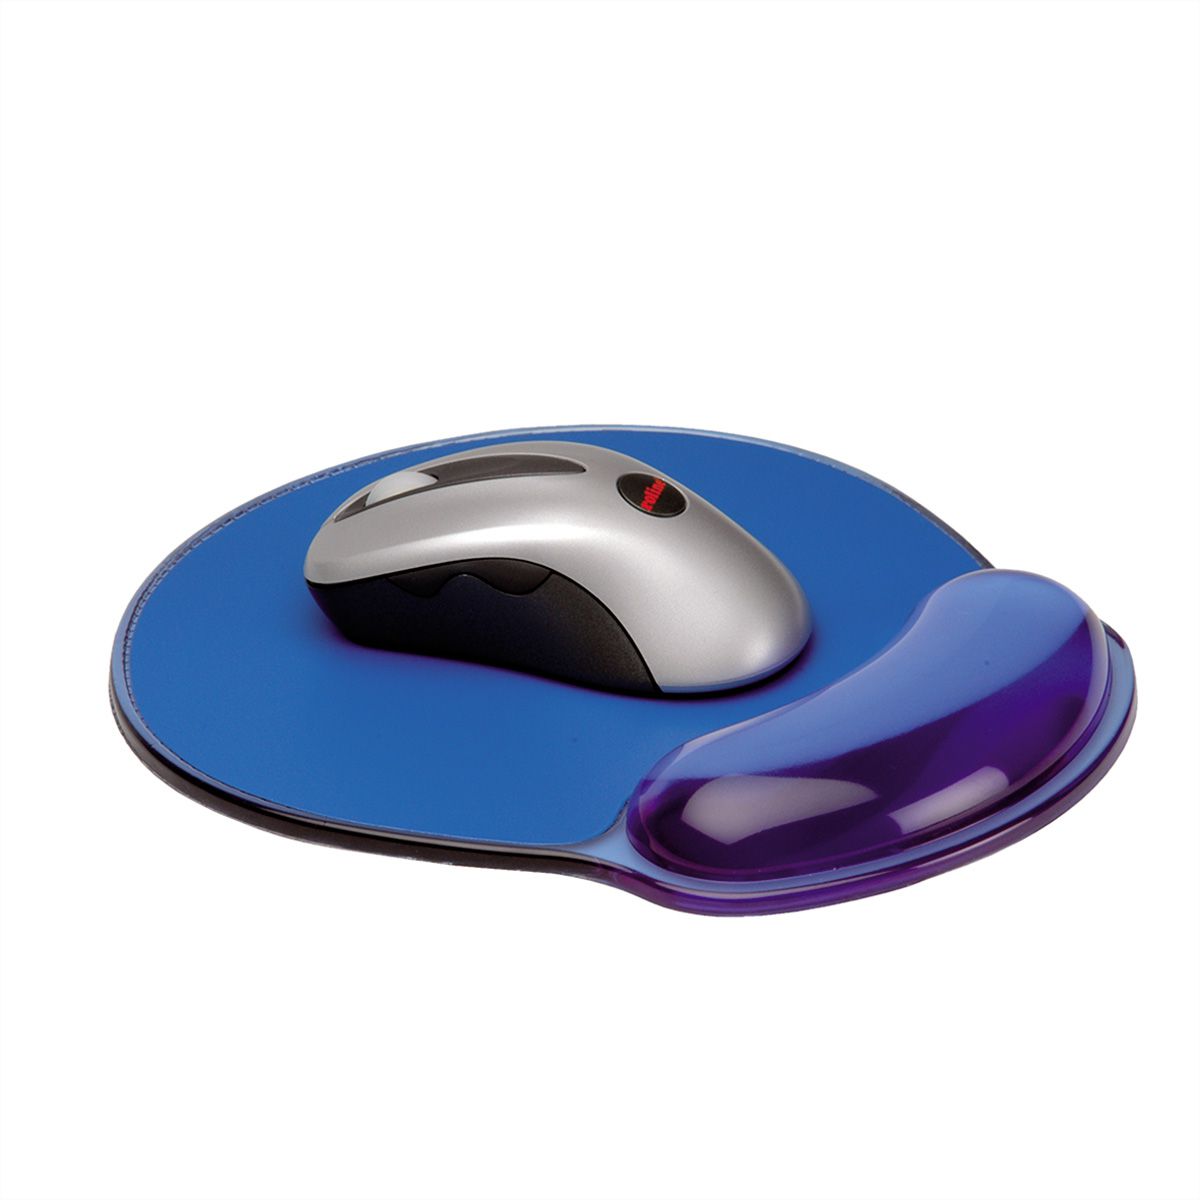 Mousepad with Wristrest, blue - SECOMP International AG